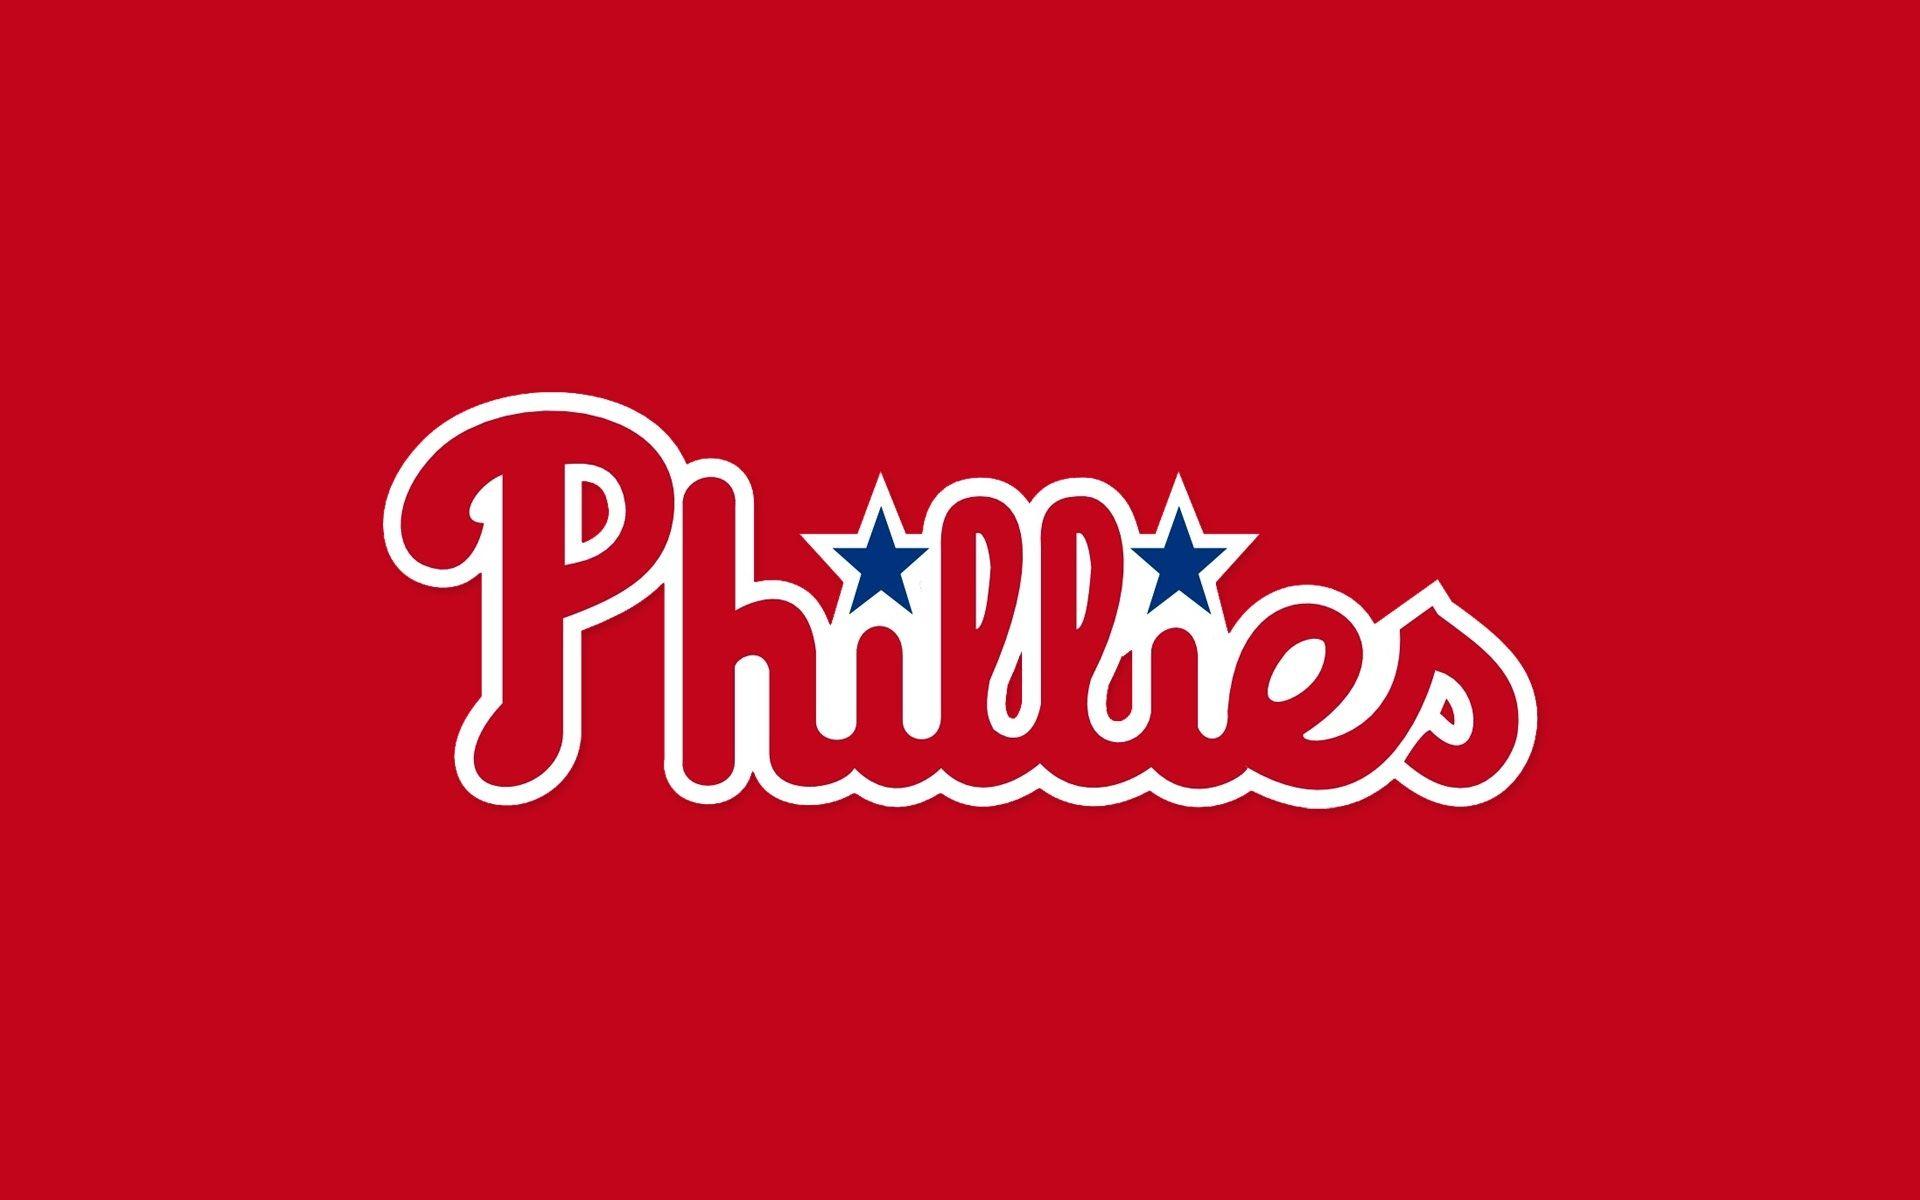 Philadelphia Phillies HD Wallpaper